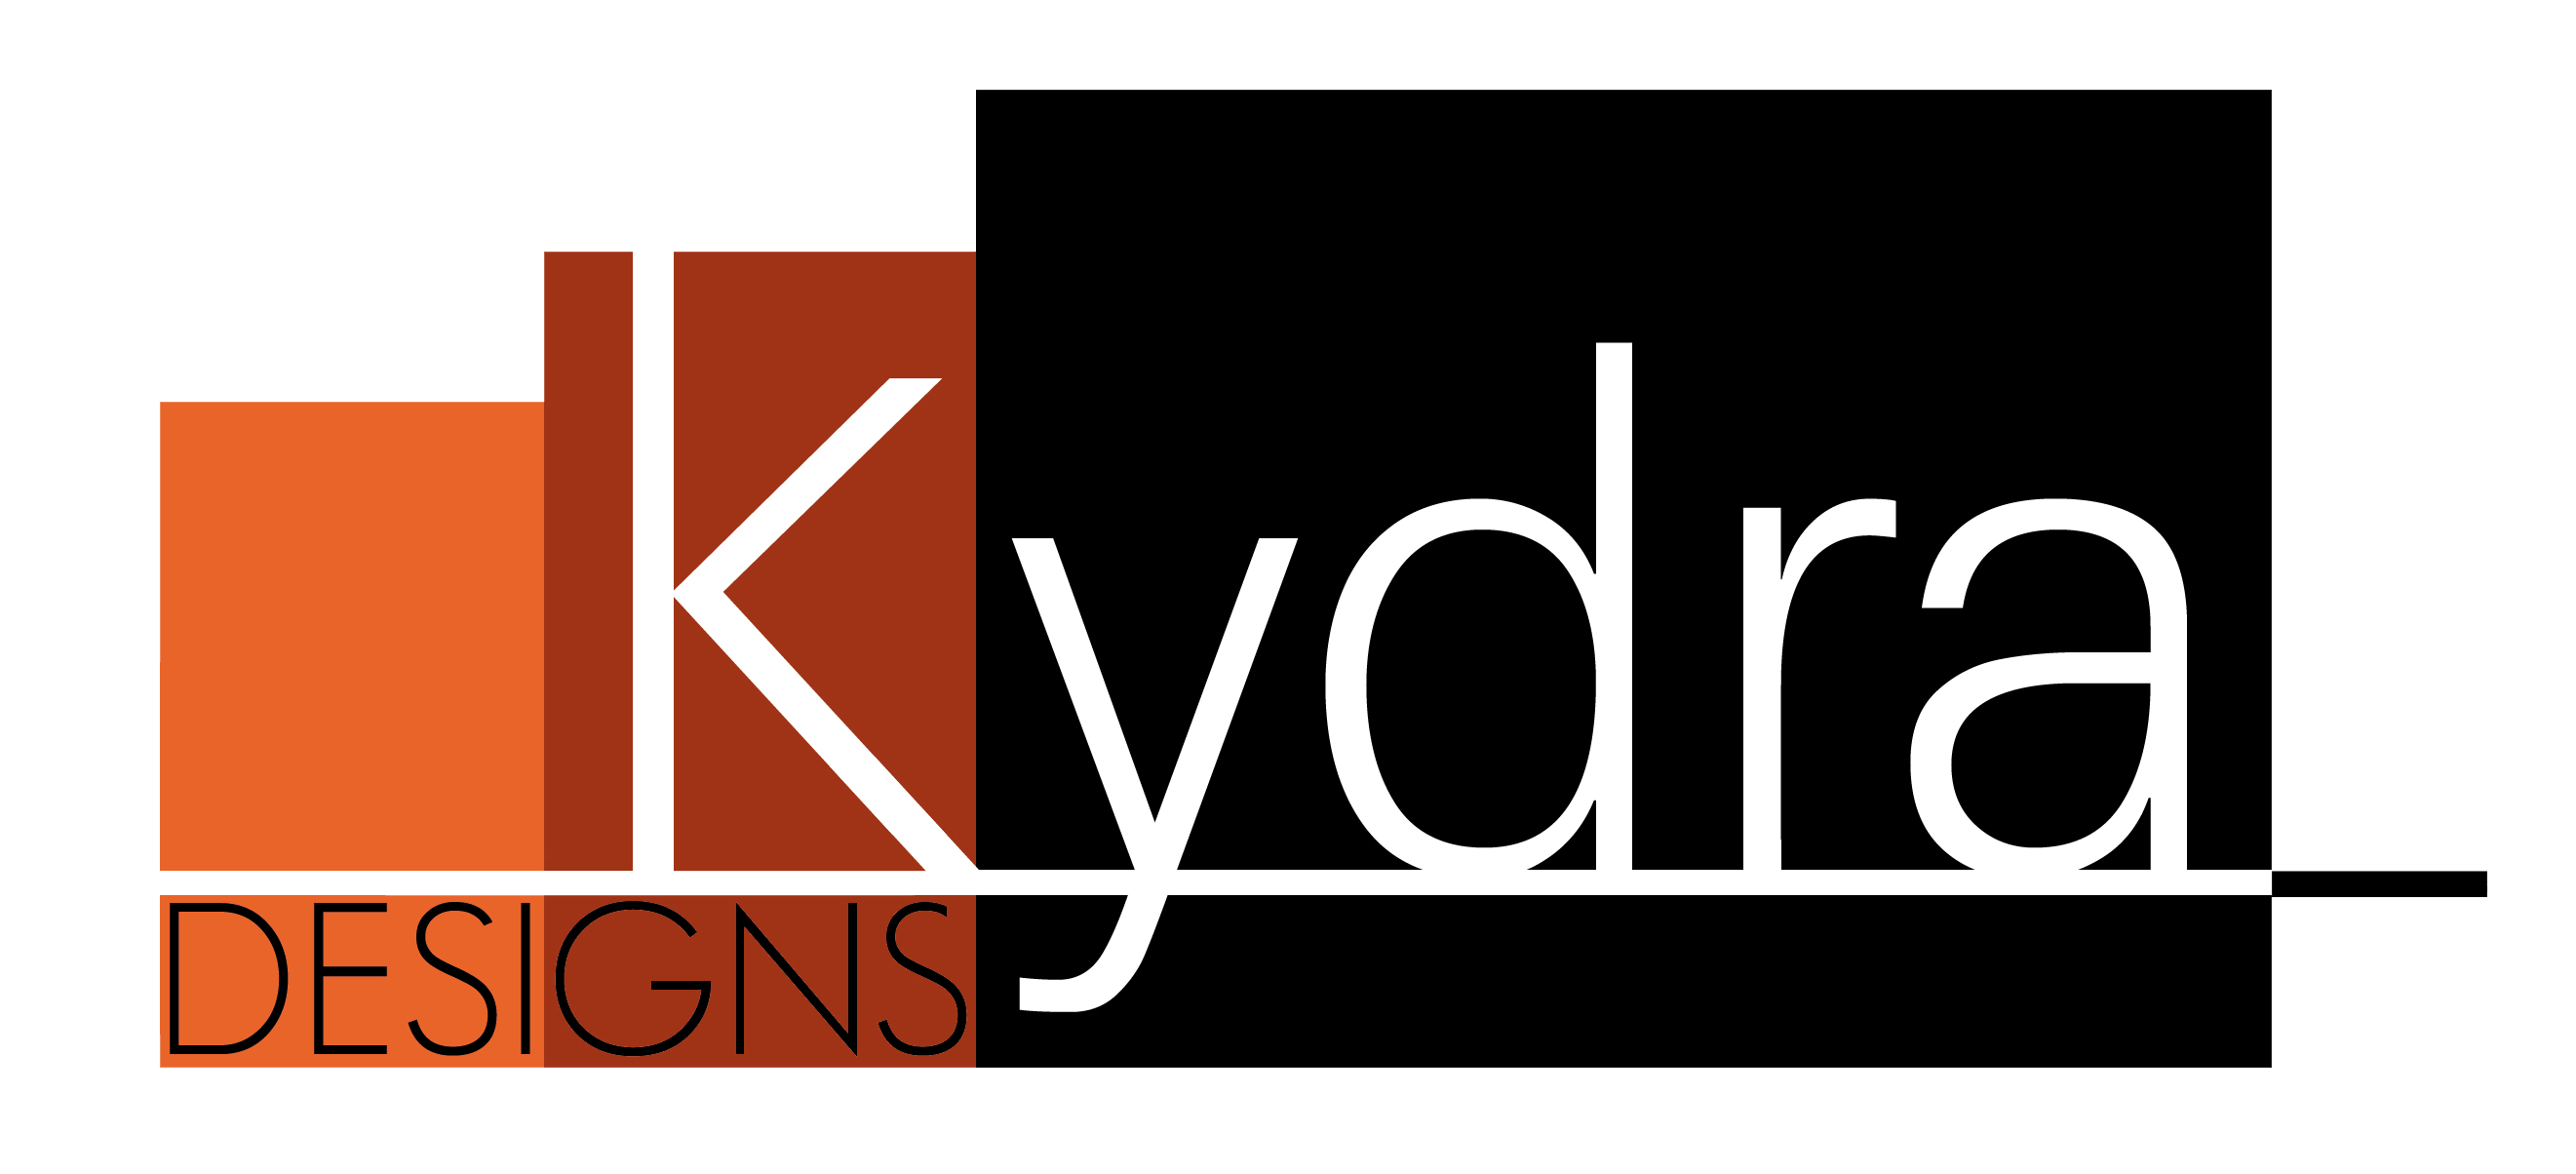 Kydra Designs